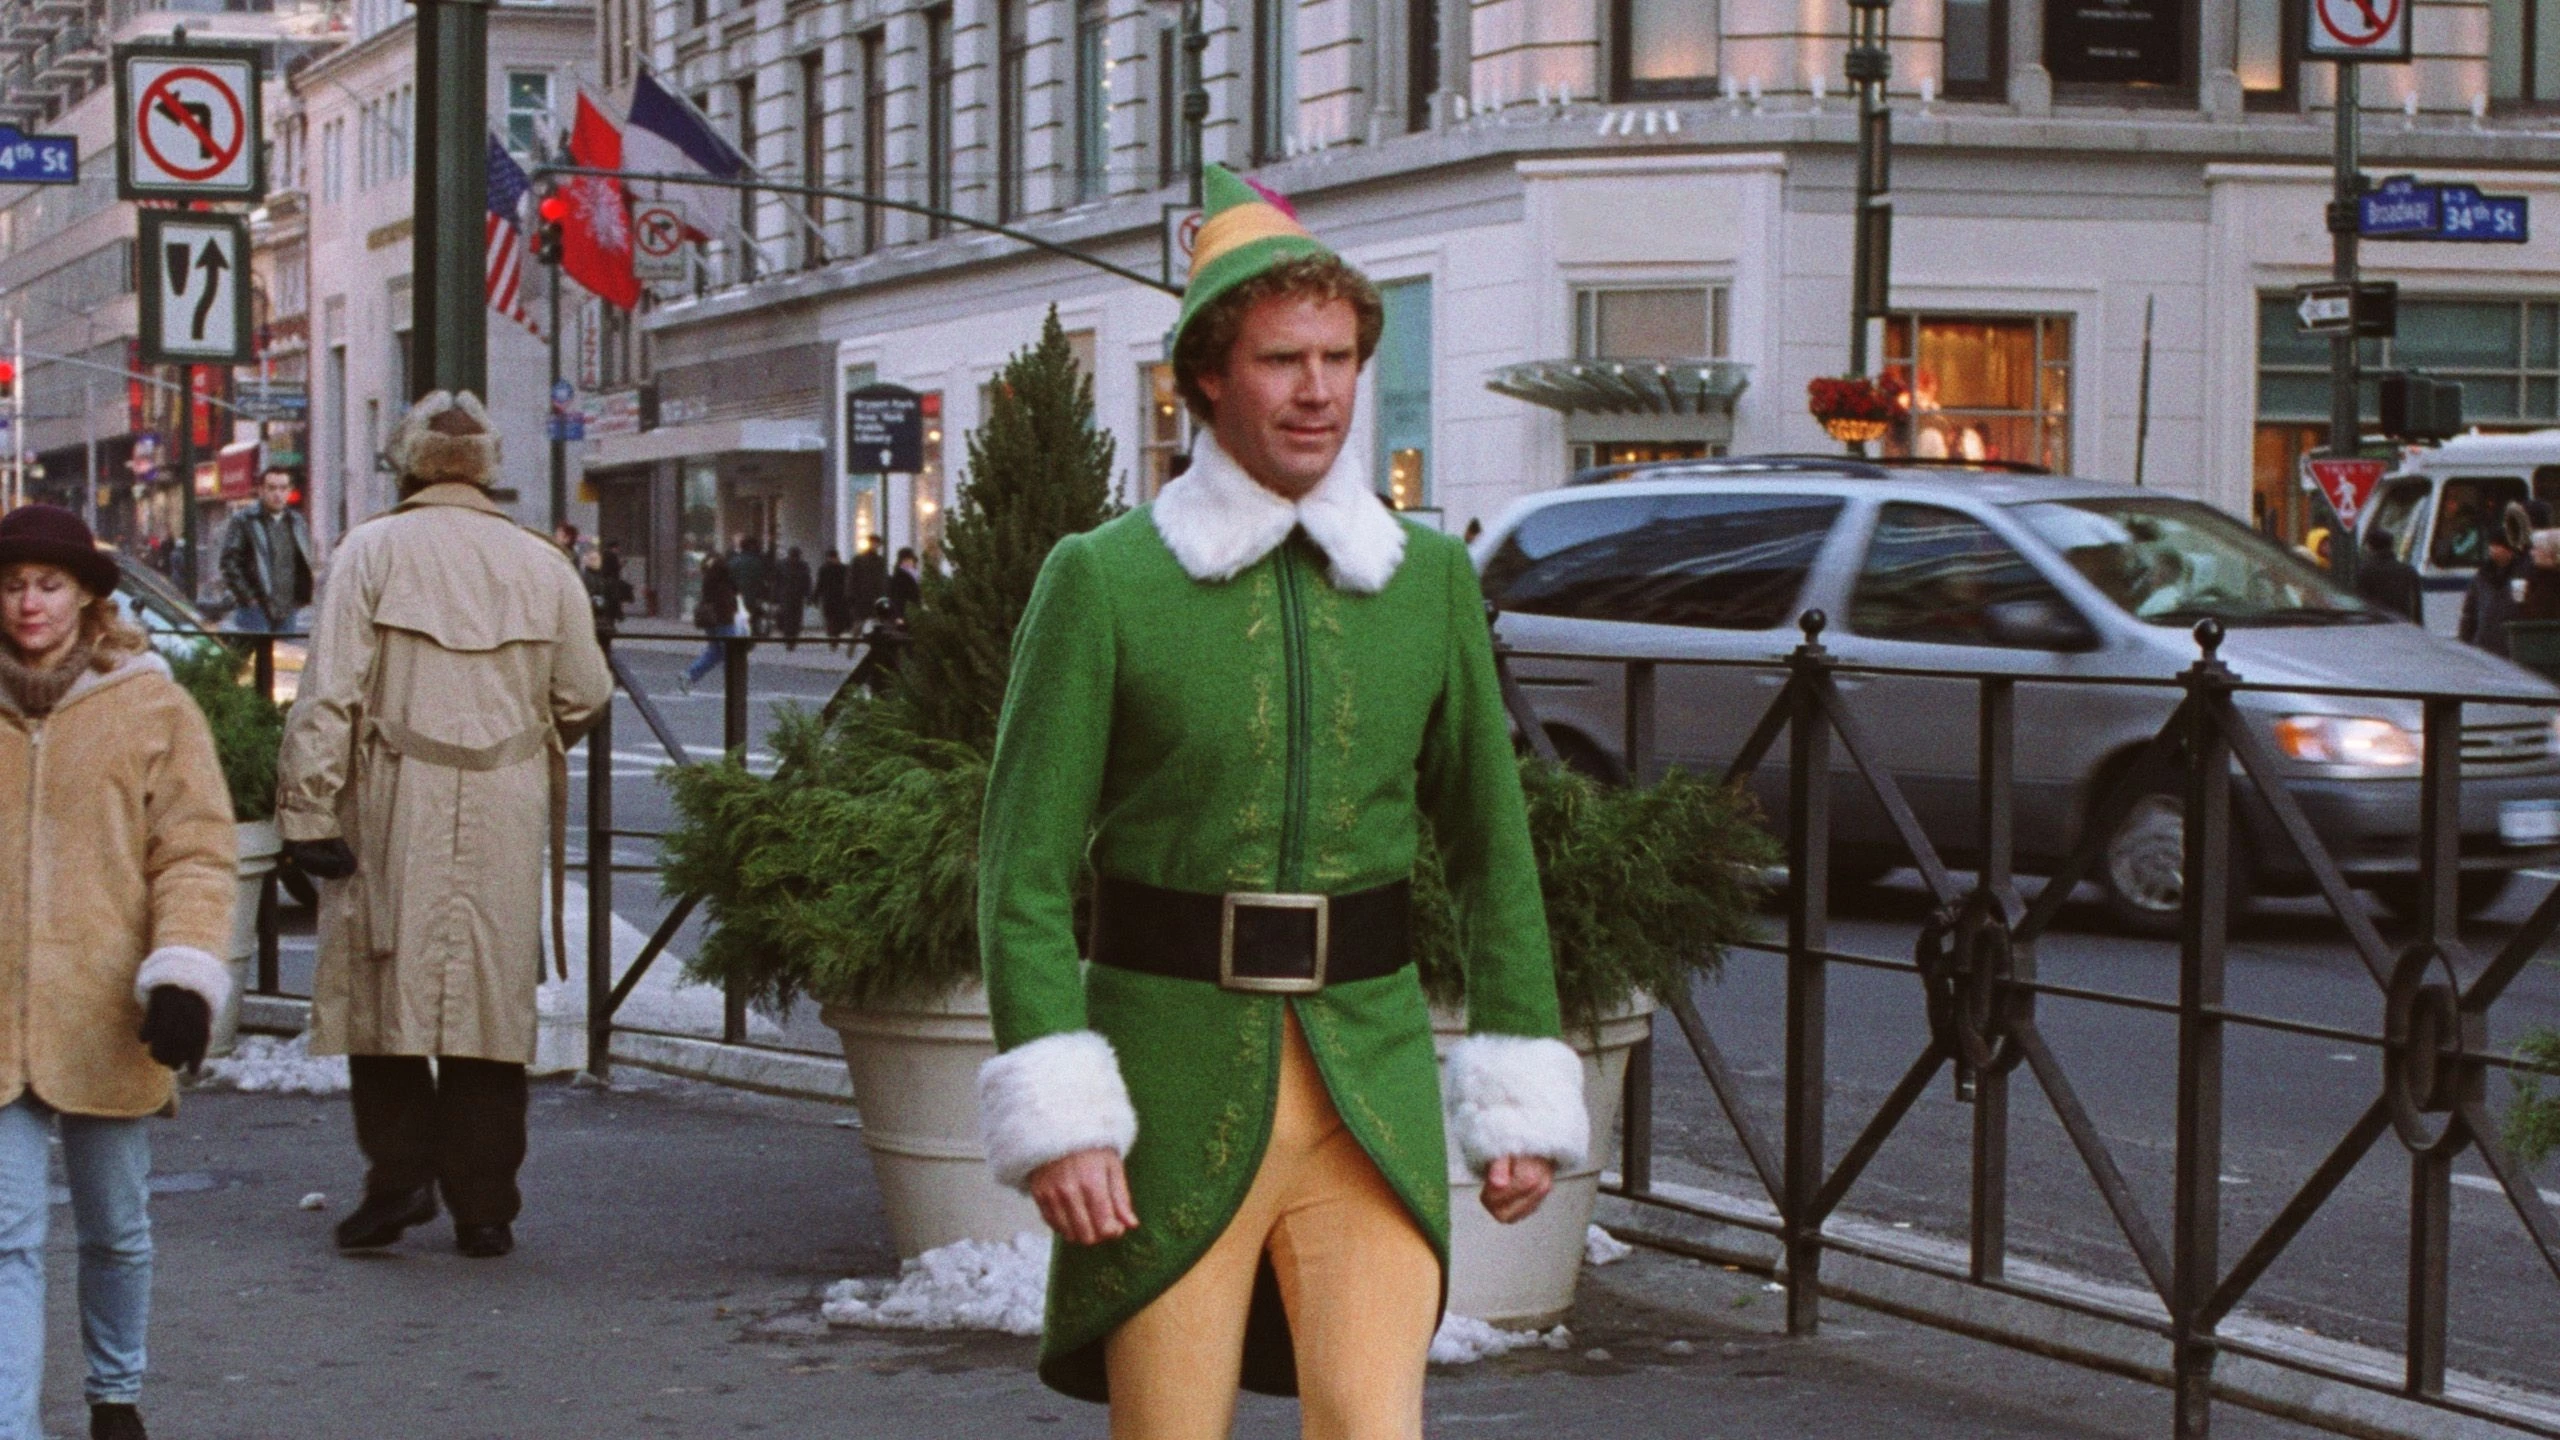 Elf was set in New York